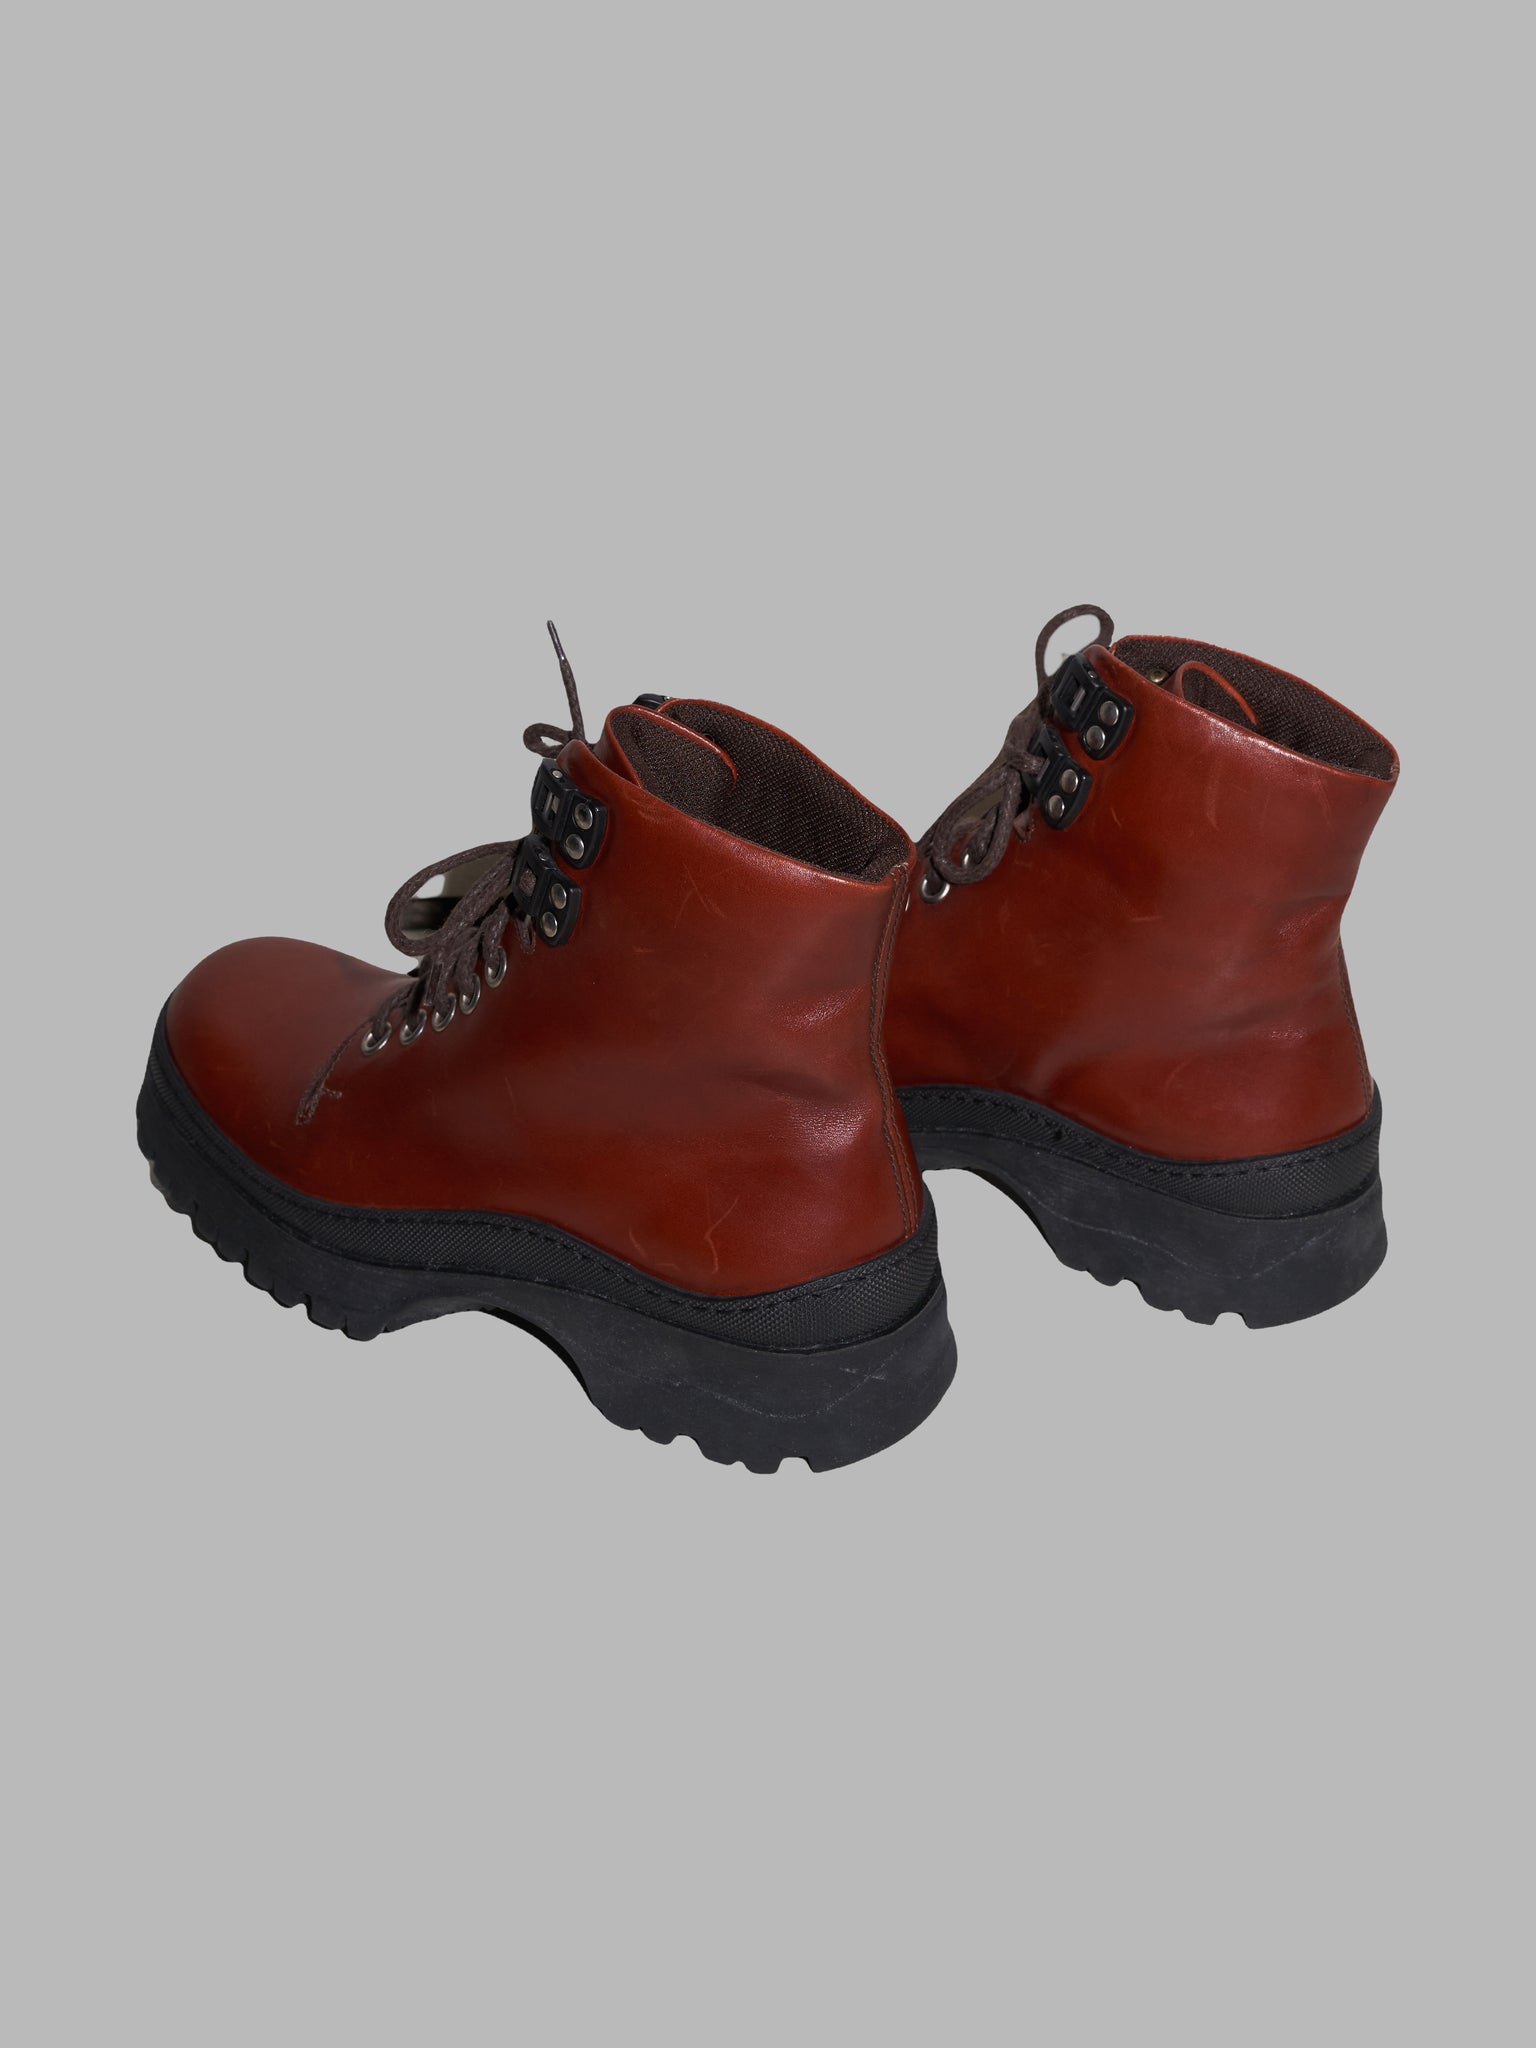 Premiata PR-1 brown leather lace up ankle boots - UK 5 / EU 39